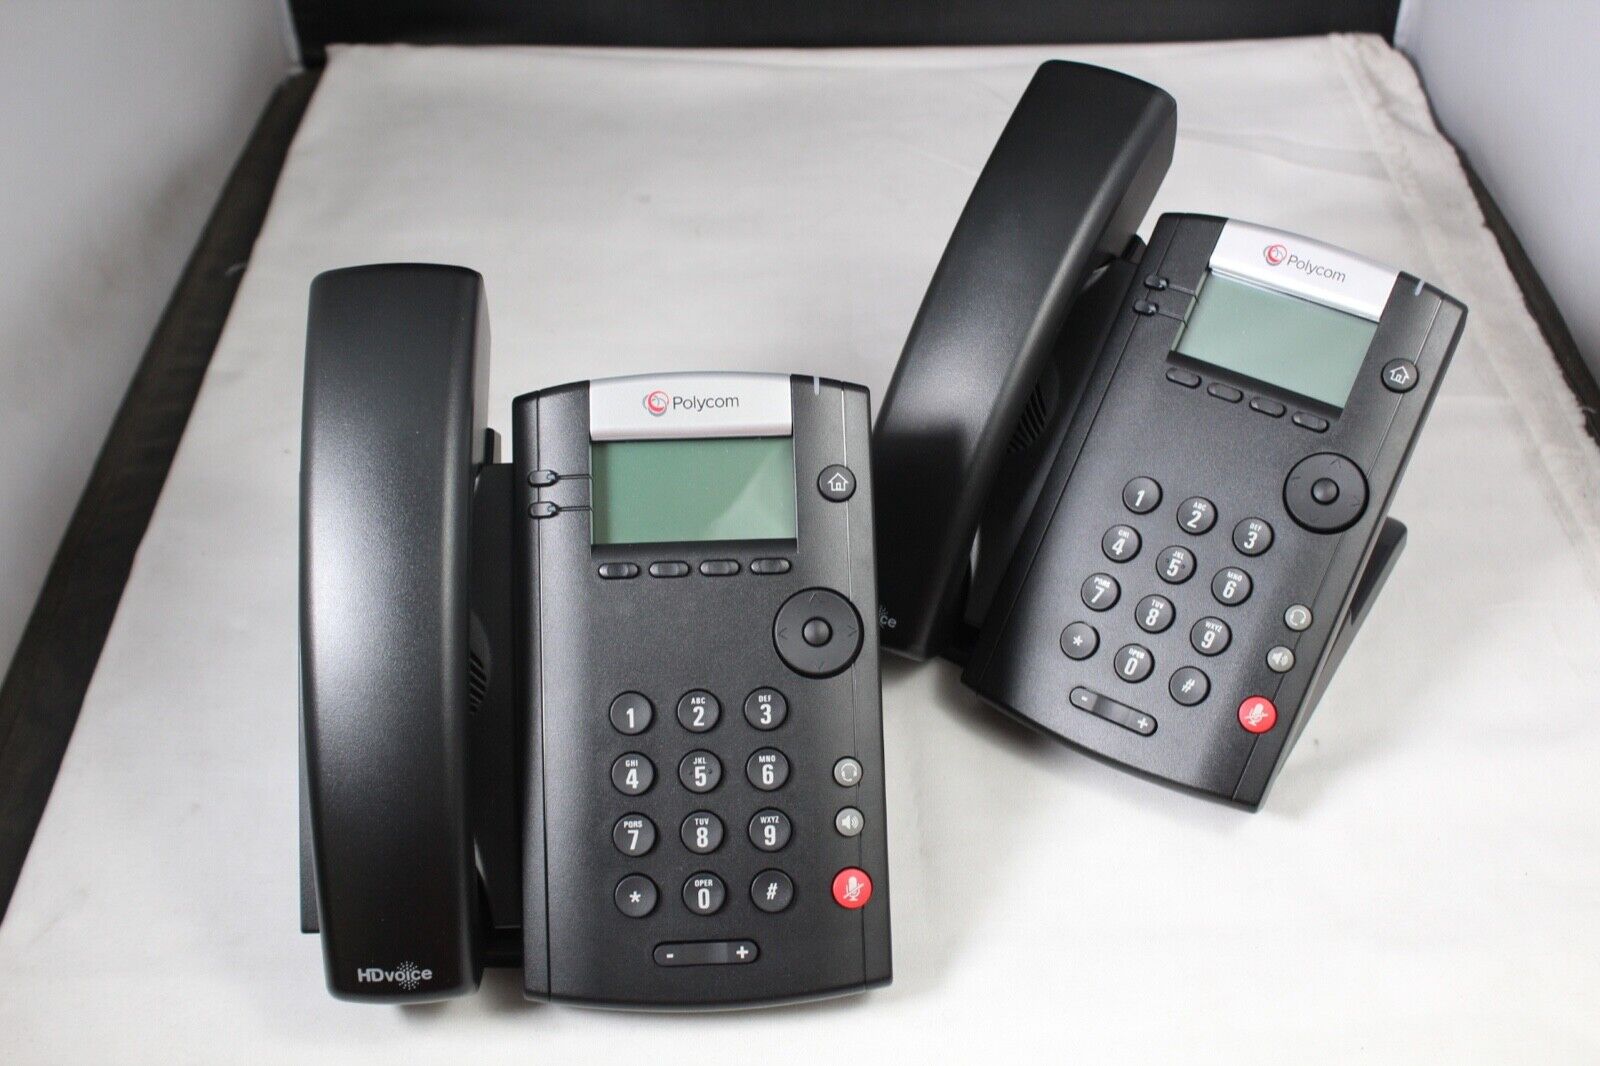 Lot of 2 Polycom VVX 201 Office IP Phones 2201-40450-001 - Refurbished